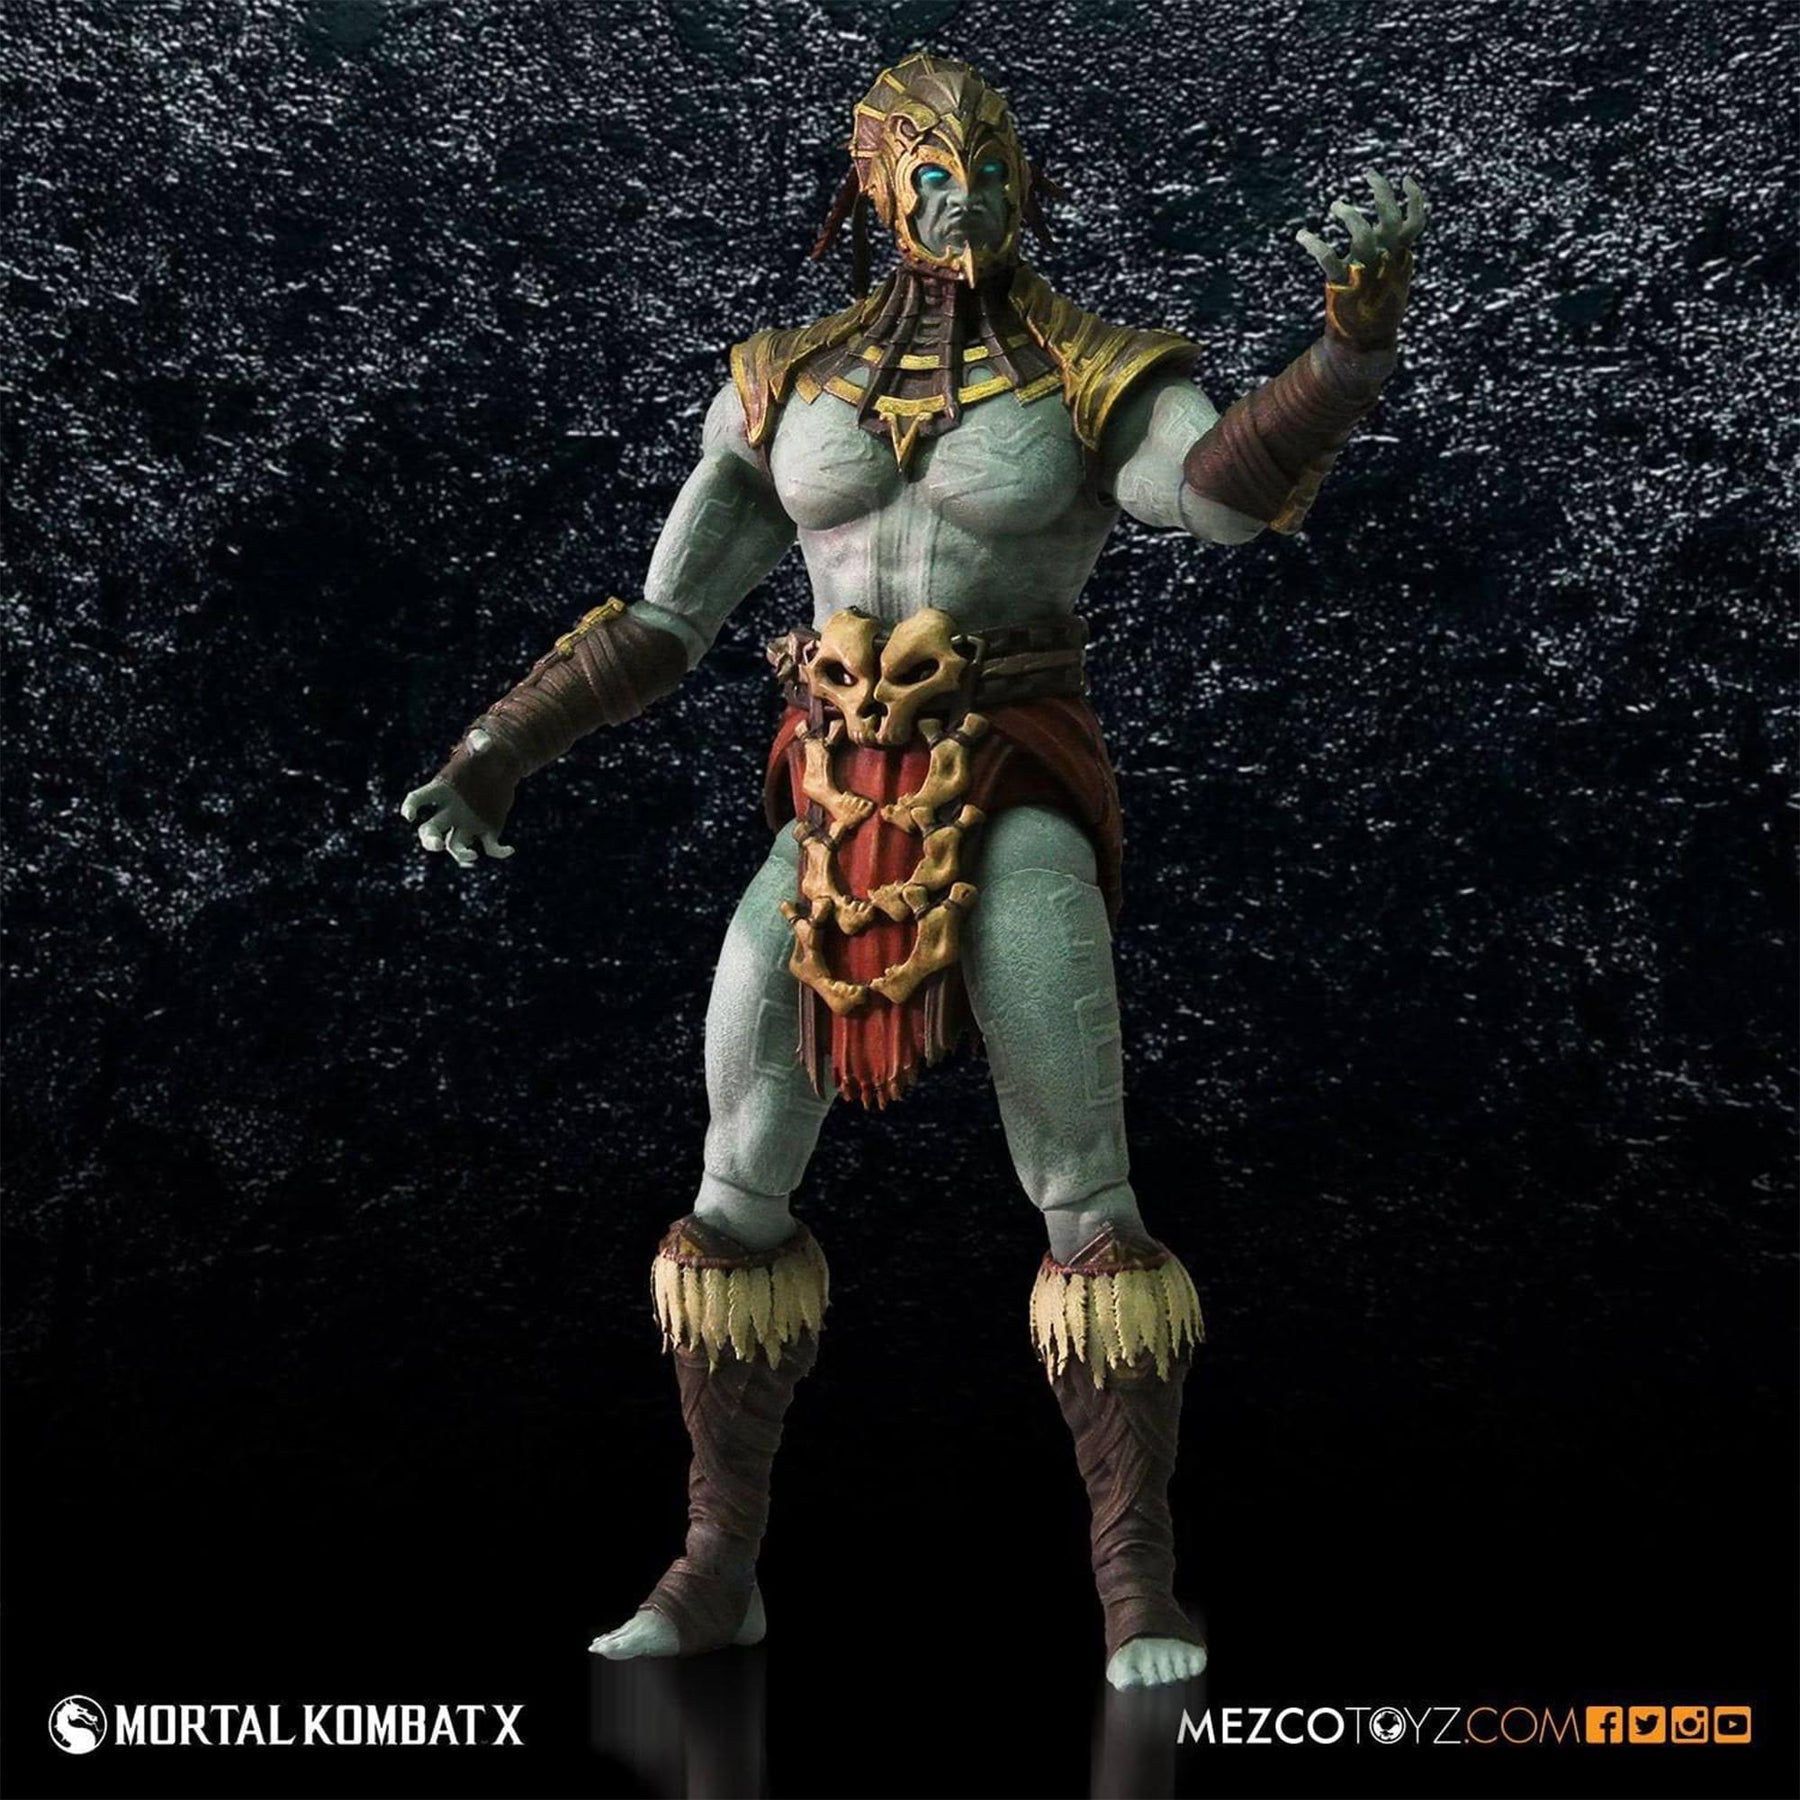 Mortal Kombat X Series 2: Kotal Kahn 6" Action Figure